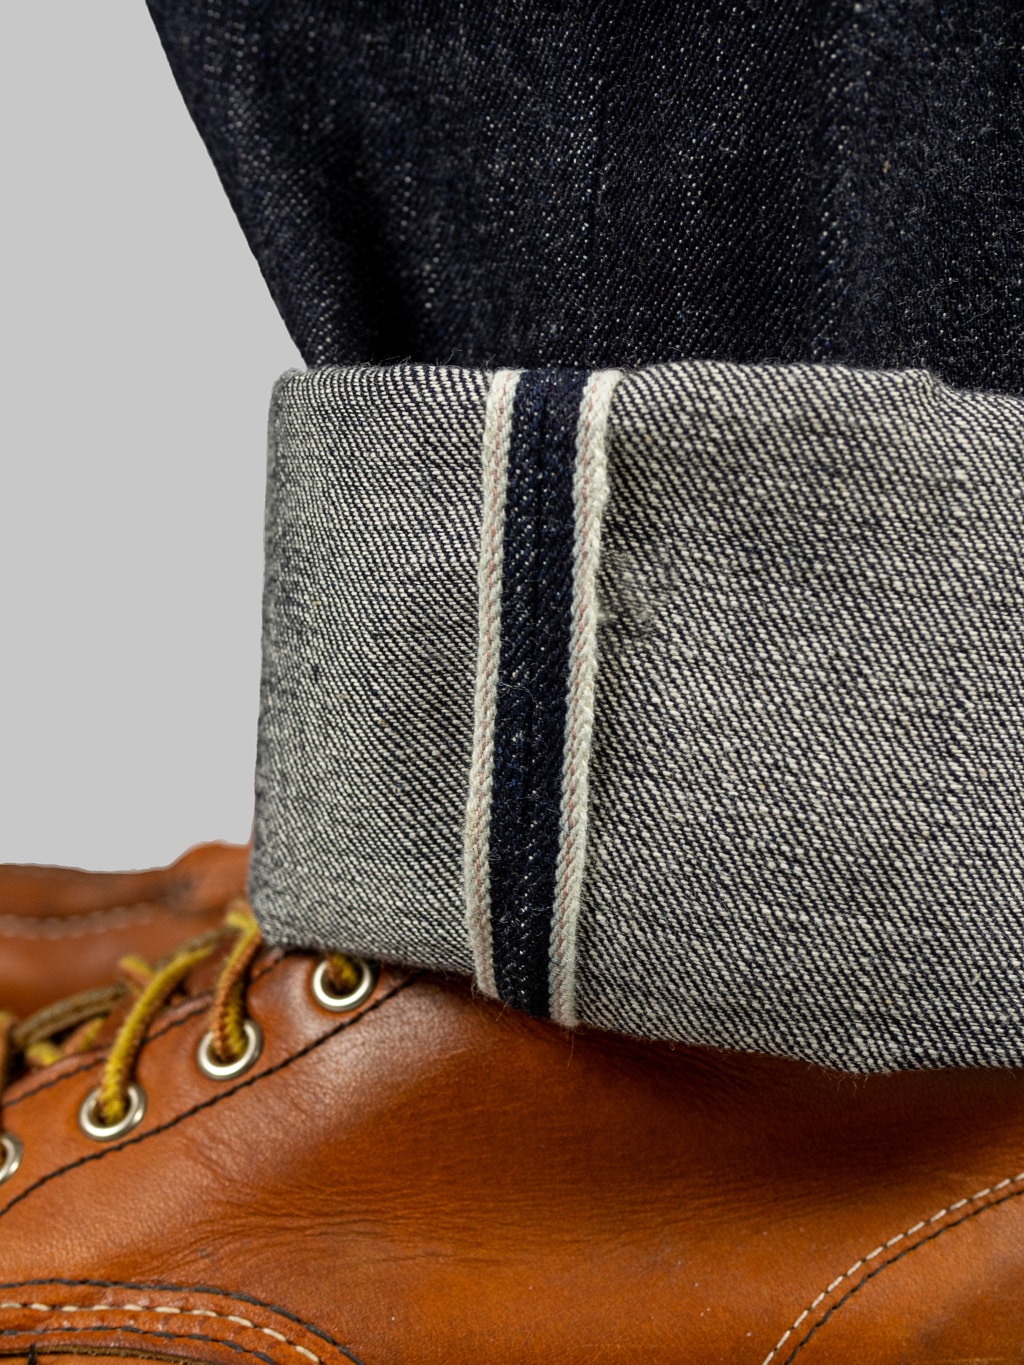 tcb 50s regular straight indigo selvedge japanese jeans closeup